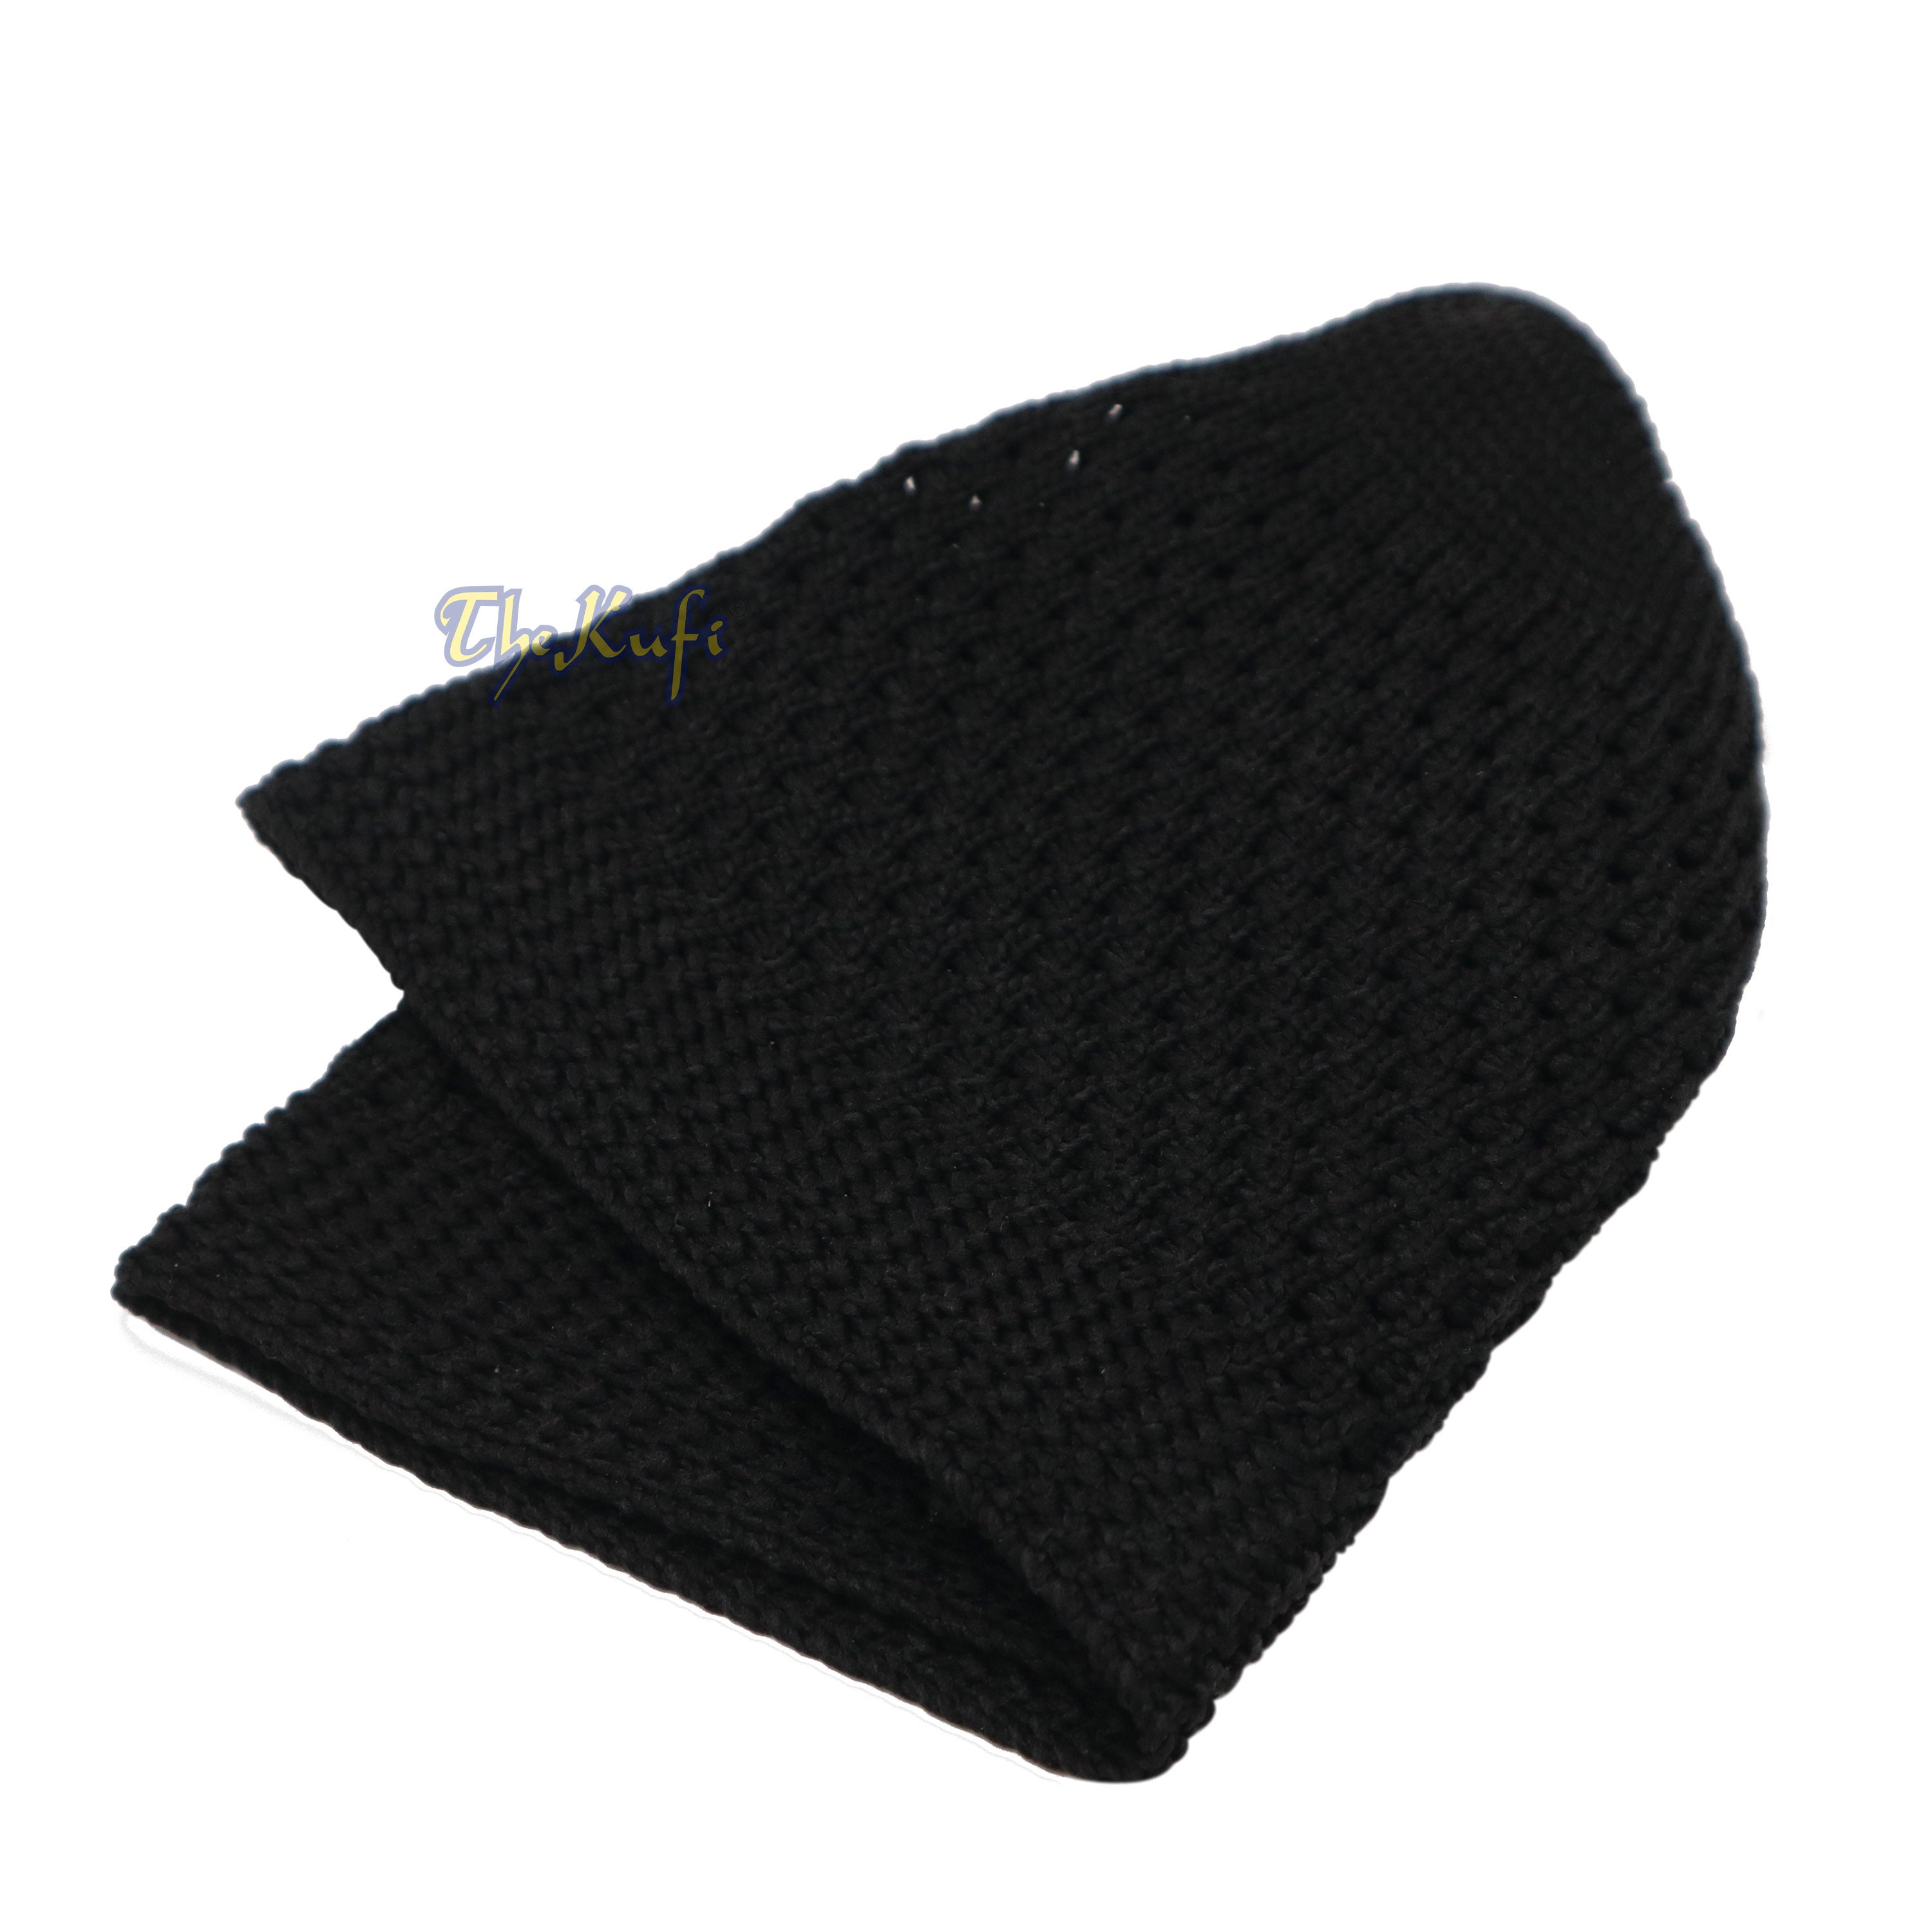 Topi Prayer Muslim 4X Open-weave Sizes Knit Headcover Skull MISWAK Beanie Cap Takke Black Etsy Hat Stretchy Skullie XS Nylon - up to FREE Kufi